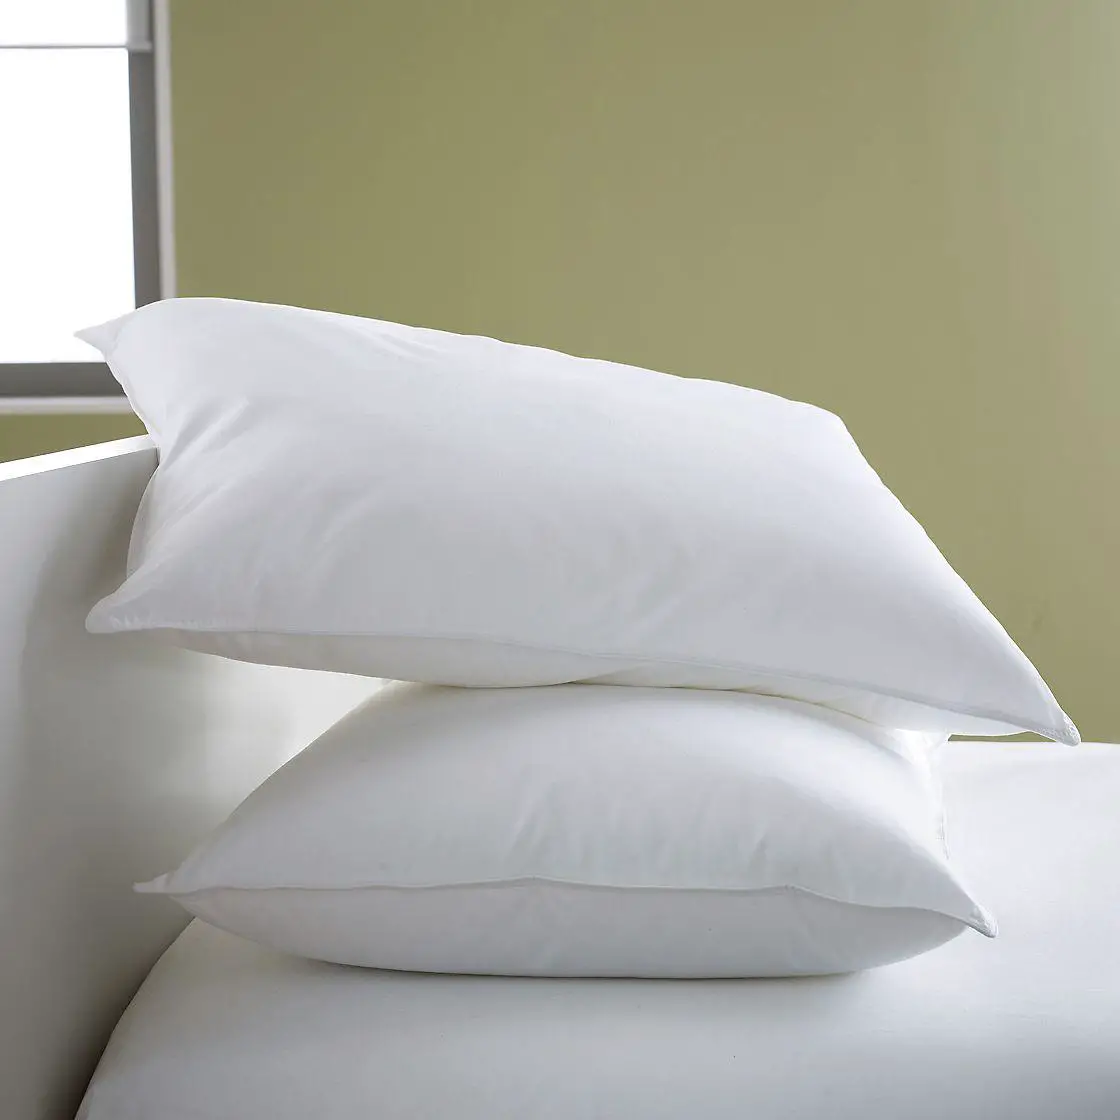 The White Willow Orthopedic Memory Foam Soft Thin Slim Sleeping Bed ...